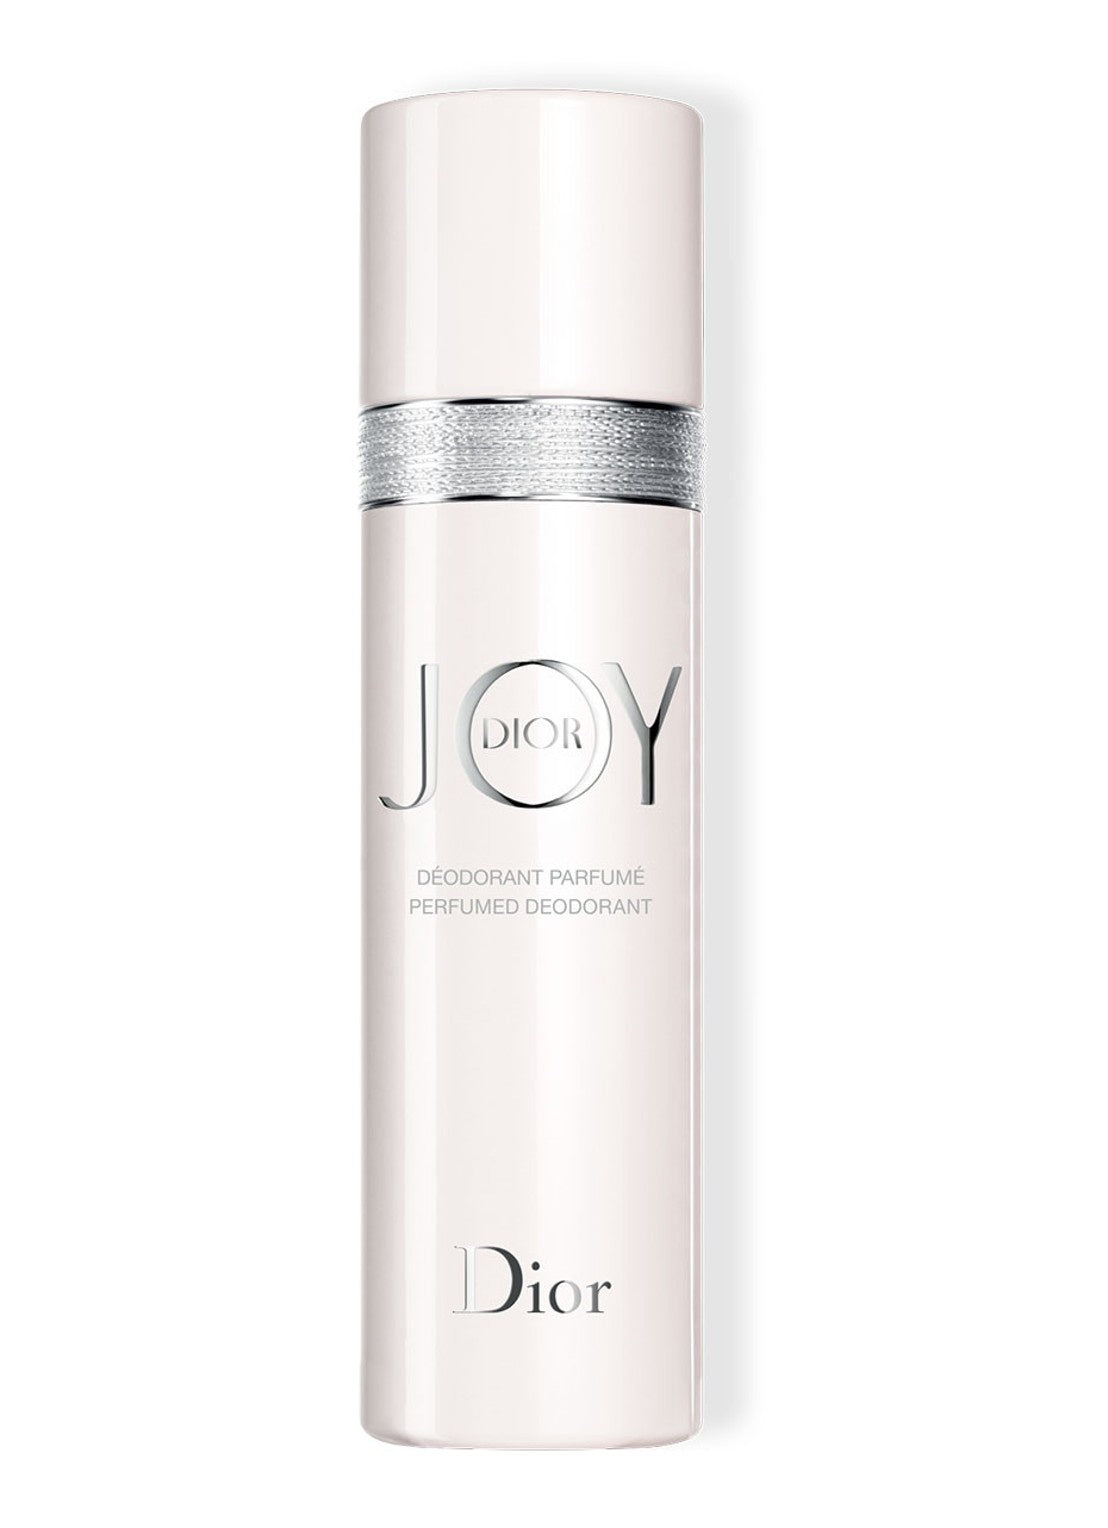 JOY by Dior Deodorant Spray